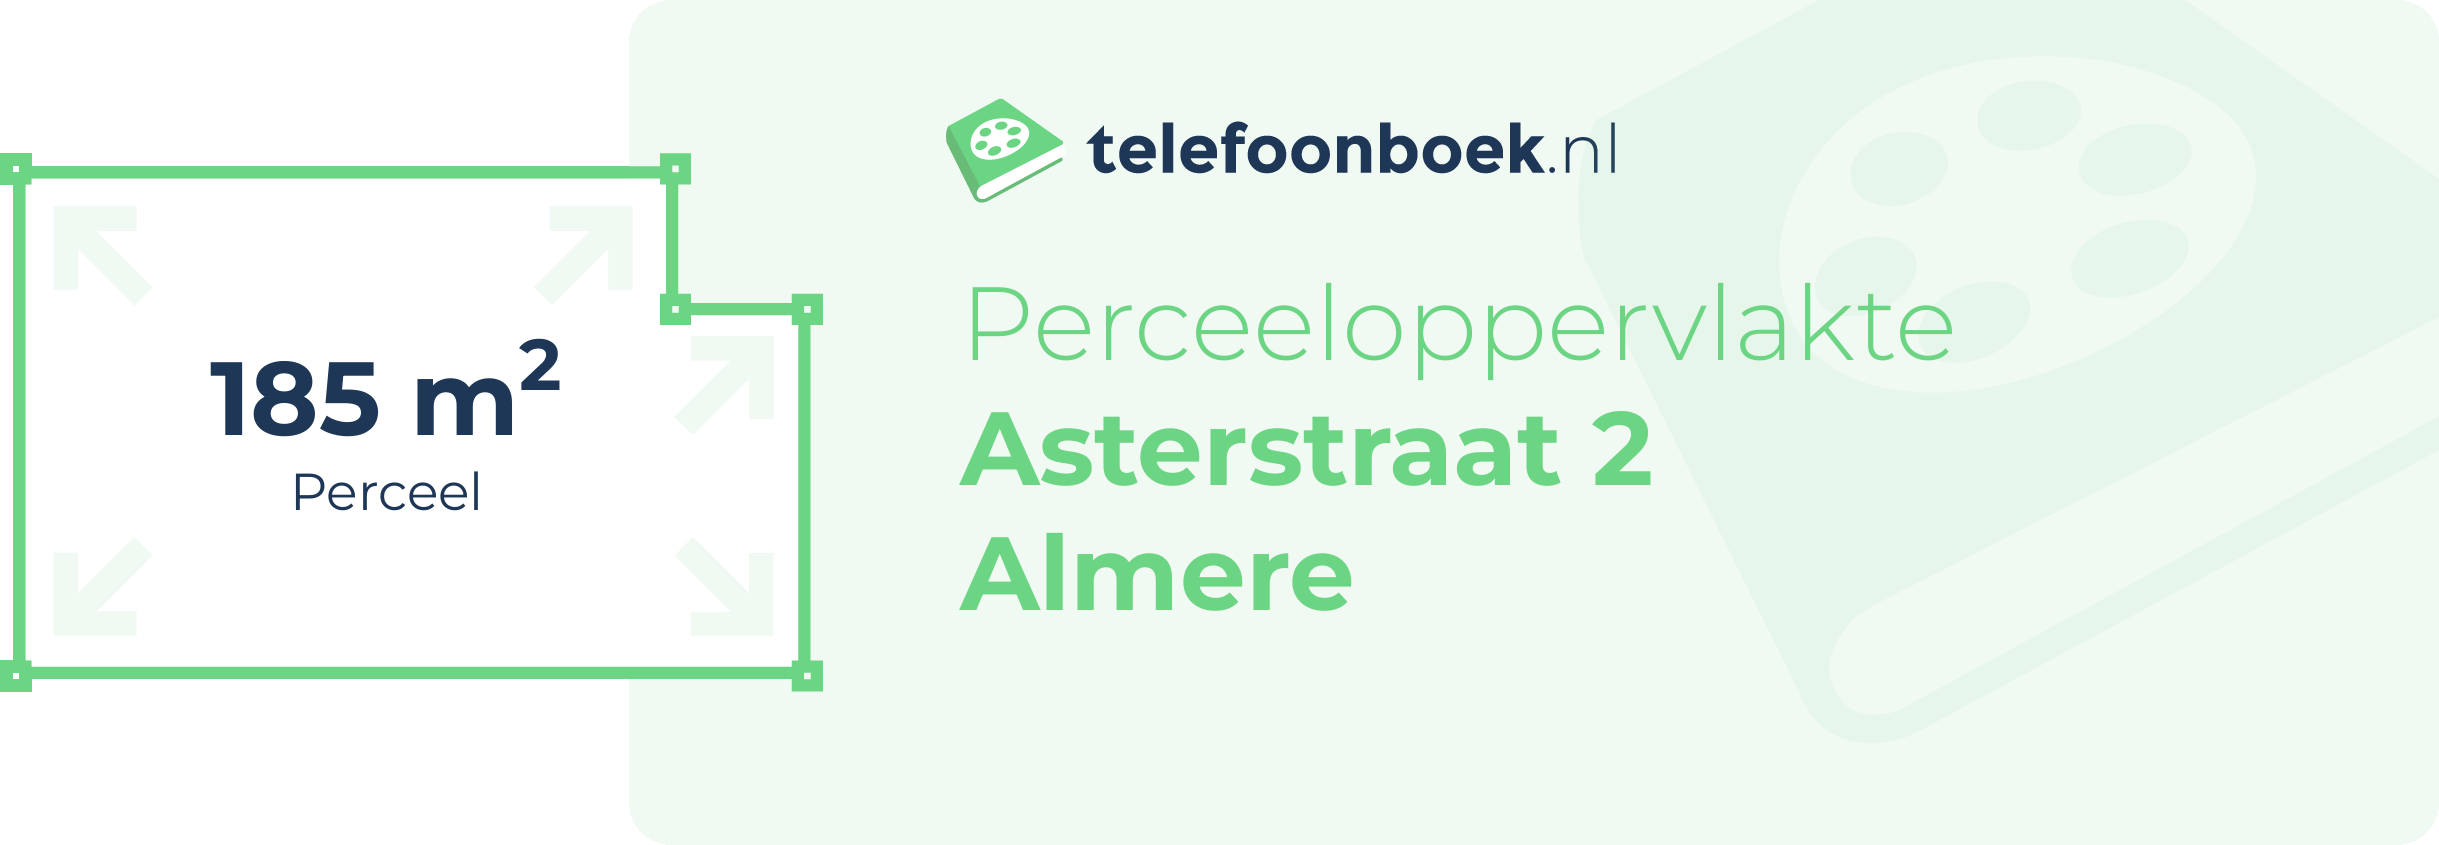 Perceeloppervlakte Asterstraat 2 Almere